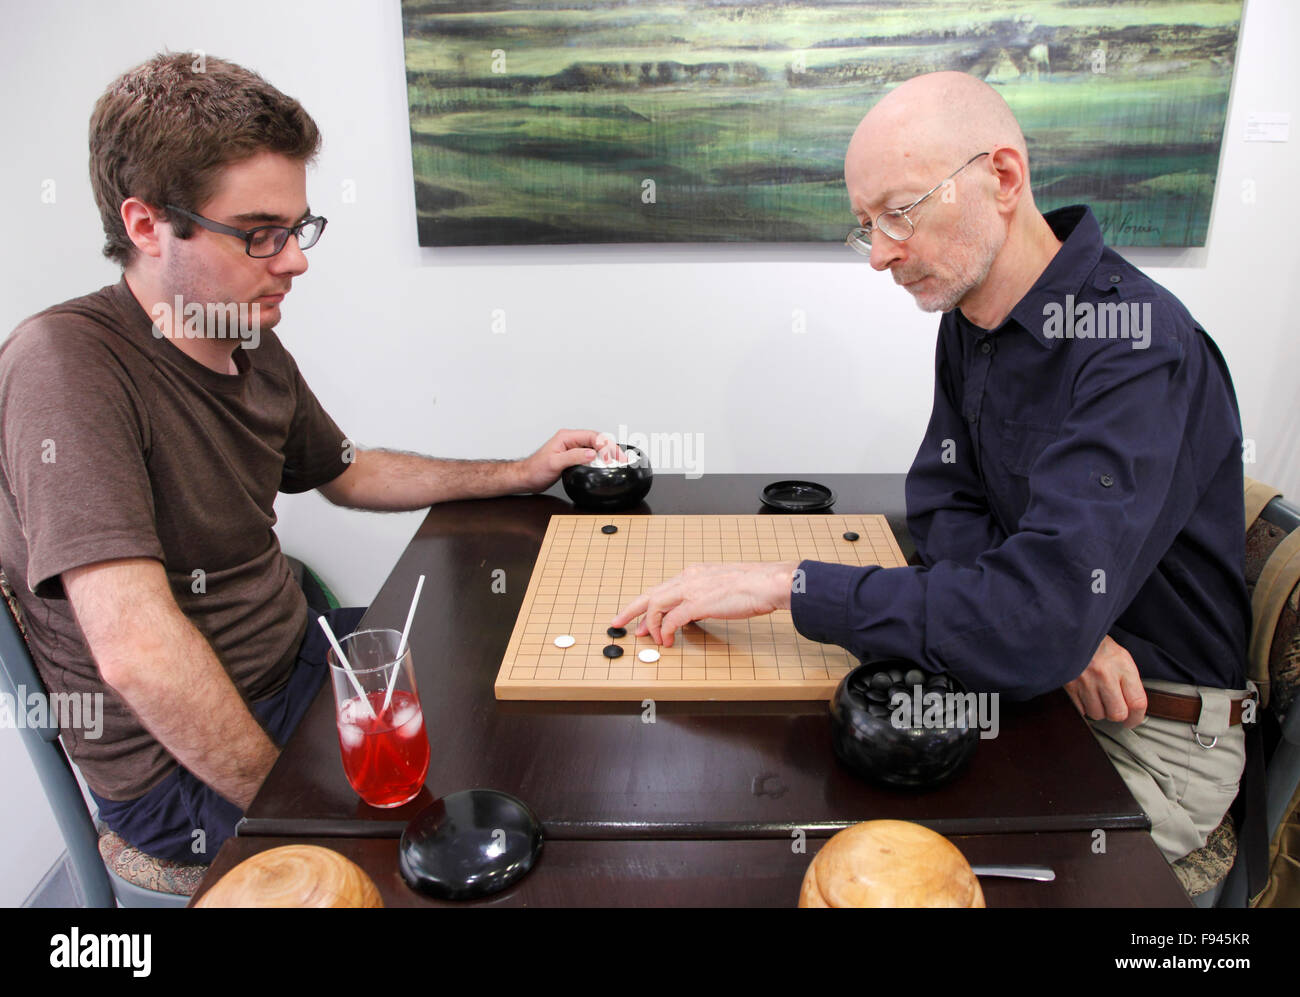 Two men playig go, strategic board game, Stock Photo